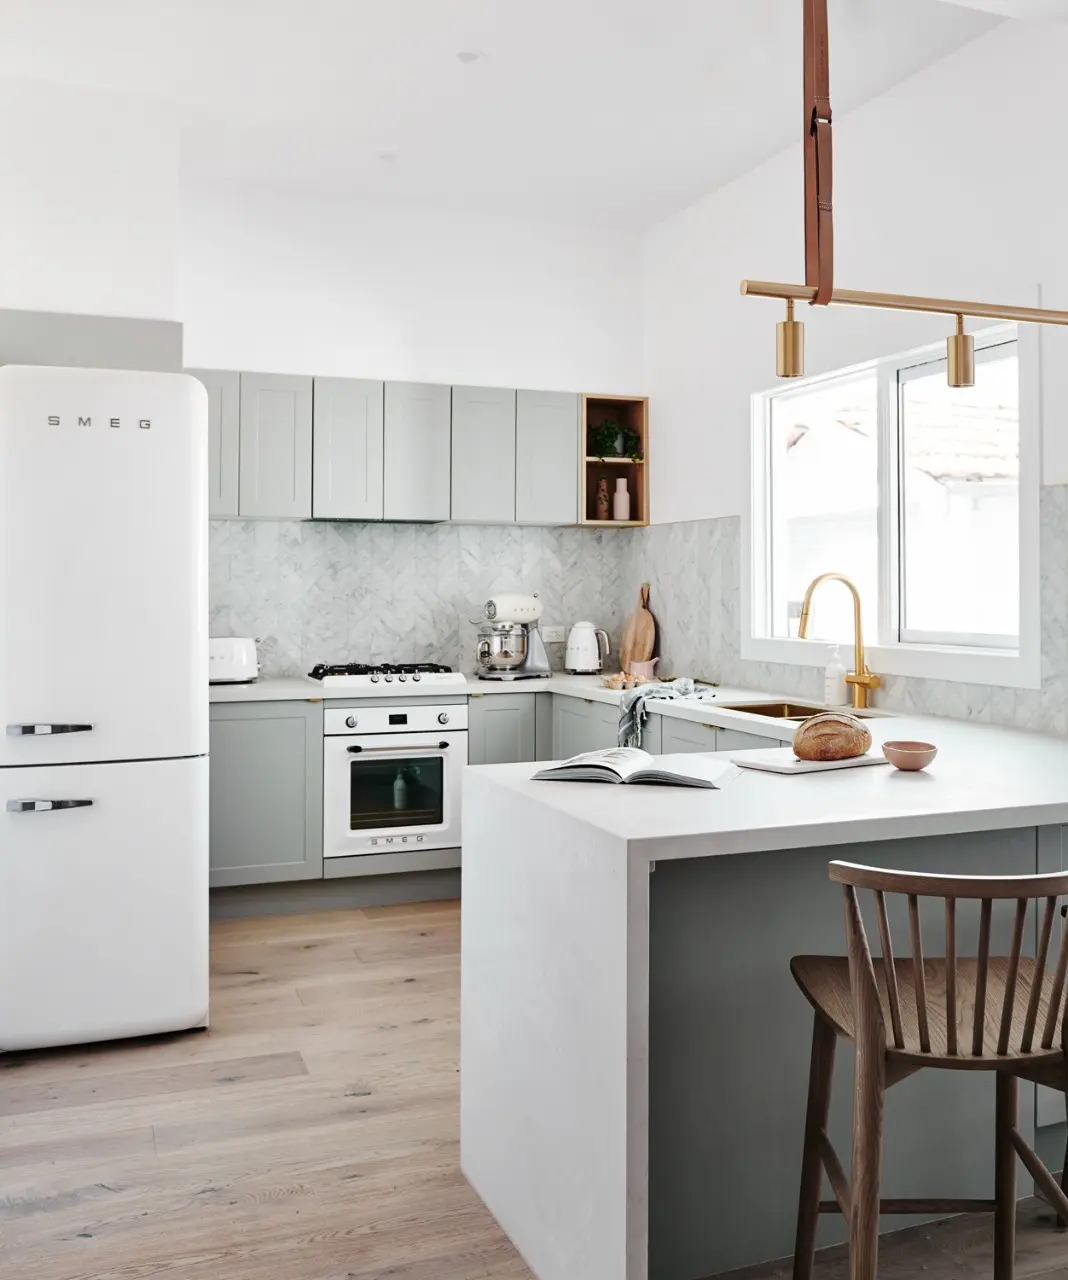 Neutral coloured kitchen with white Smeg fridge and wooden floor